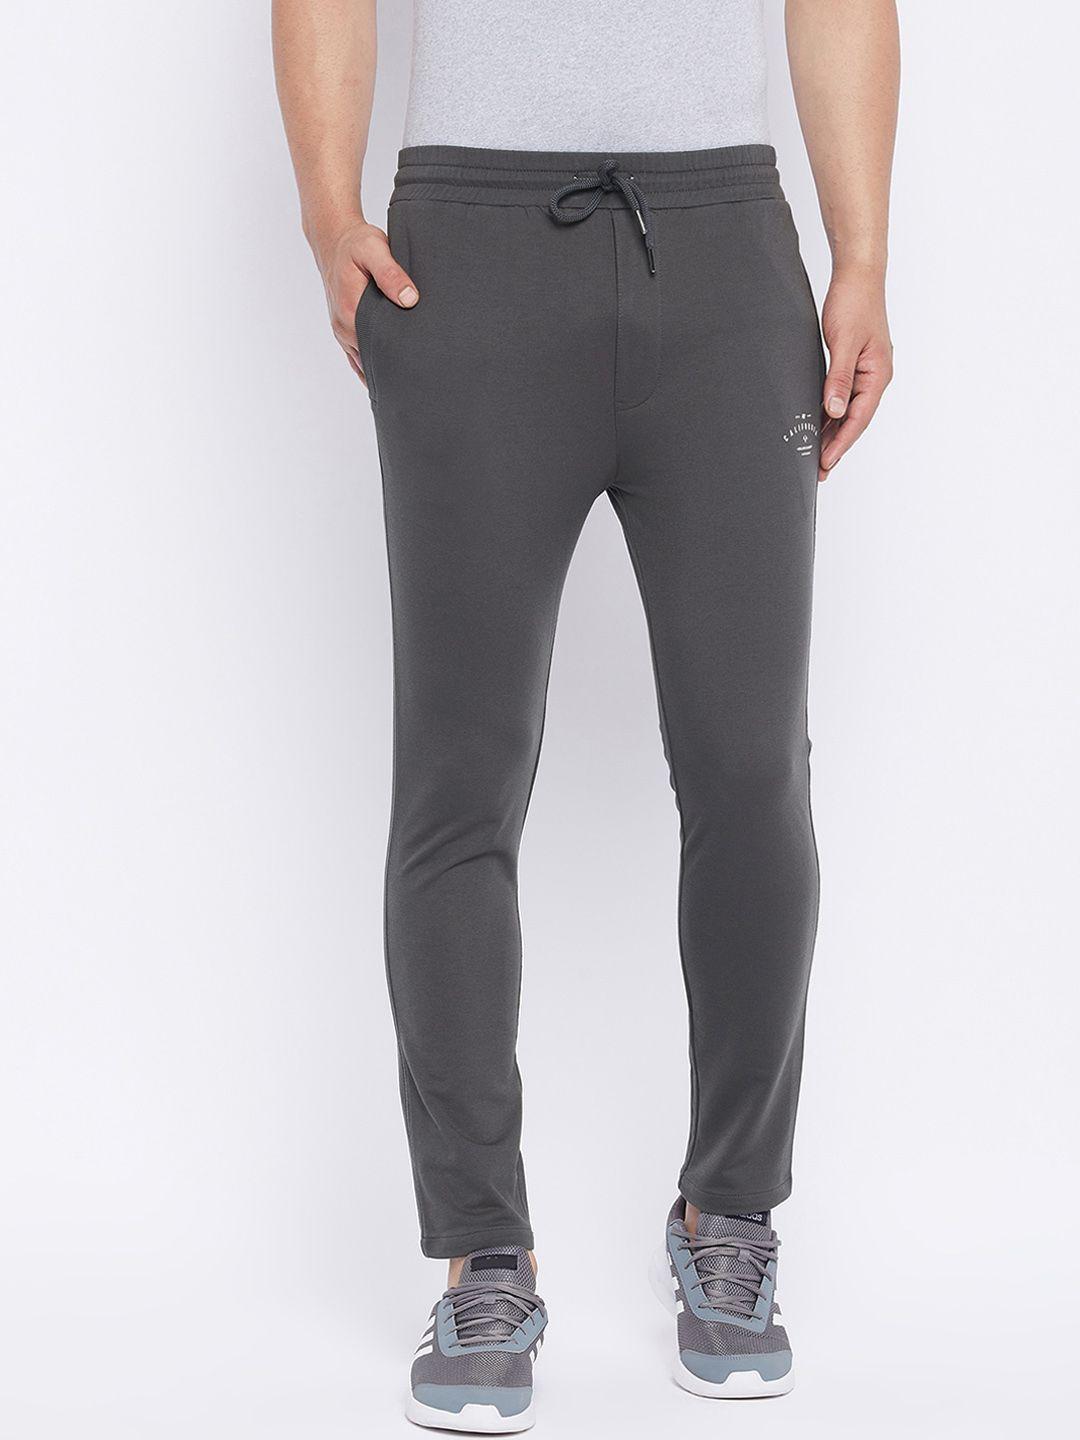 qubic-men-charcoal-grey-solid-slim-fit-track-pants